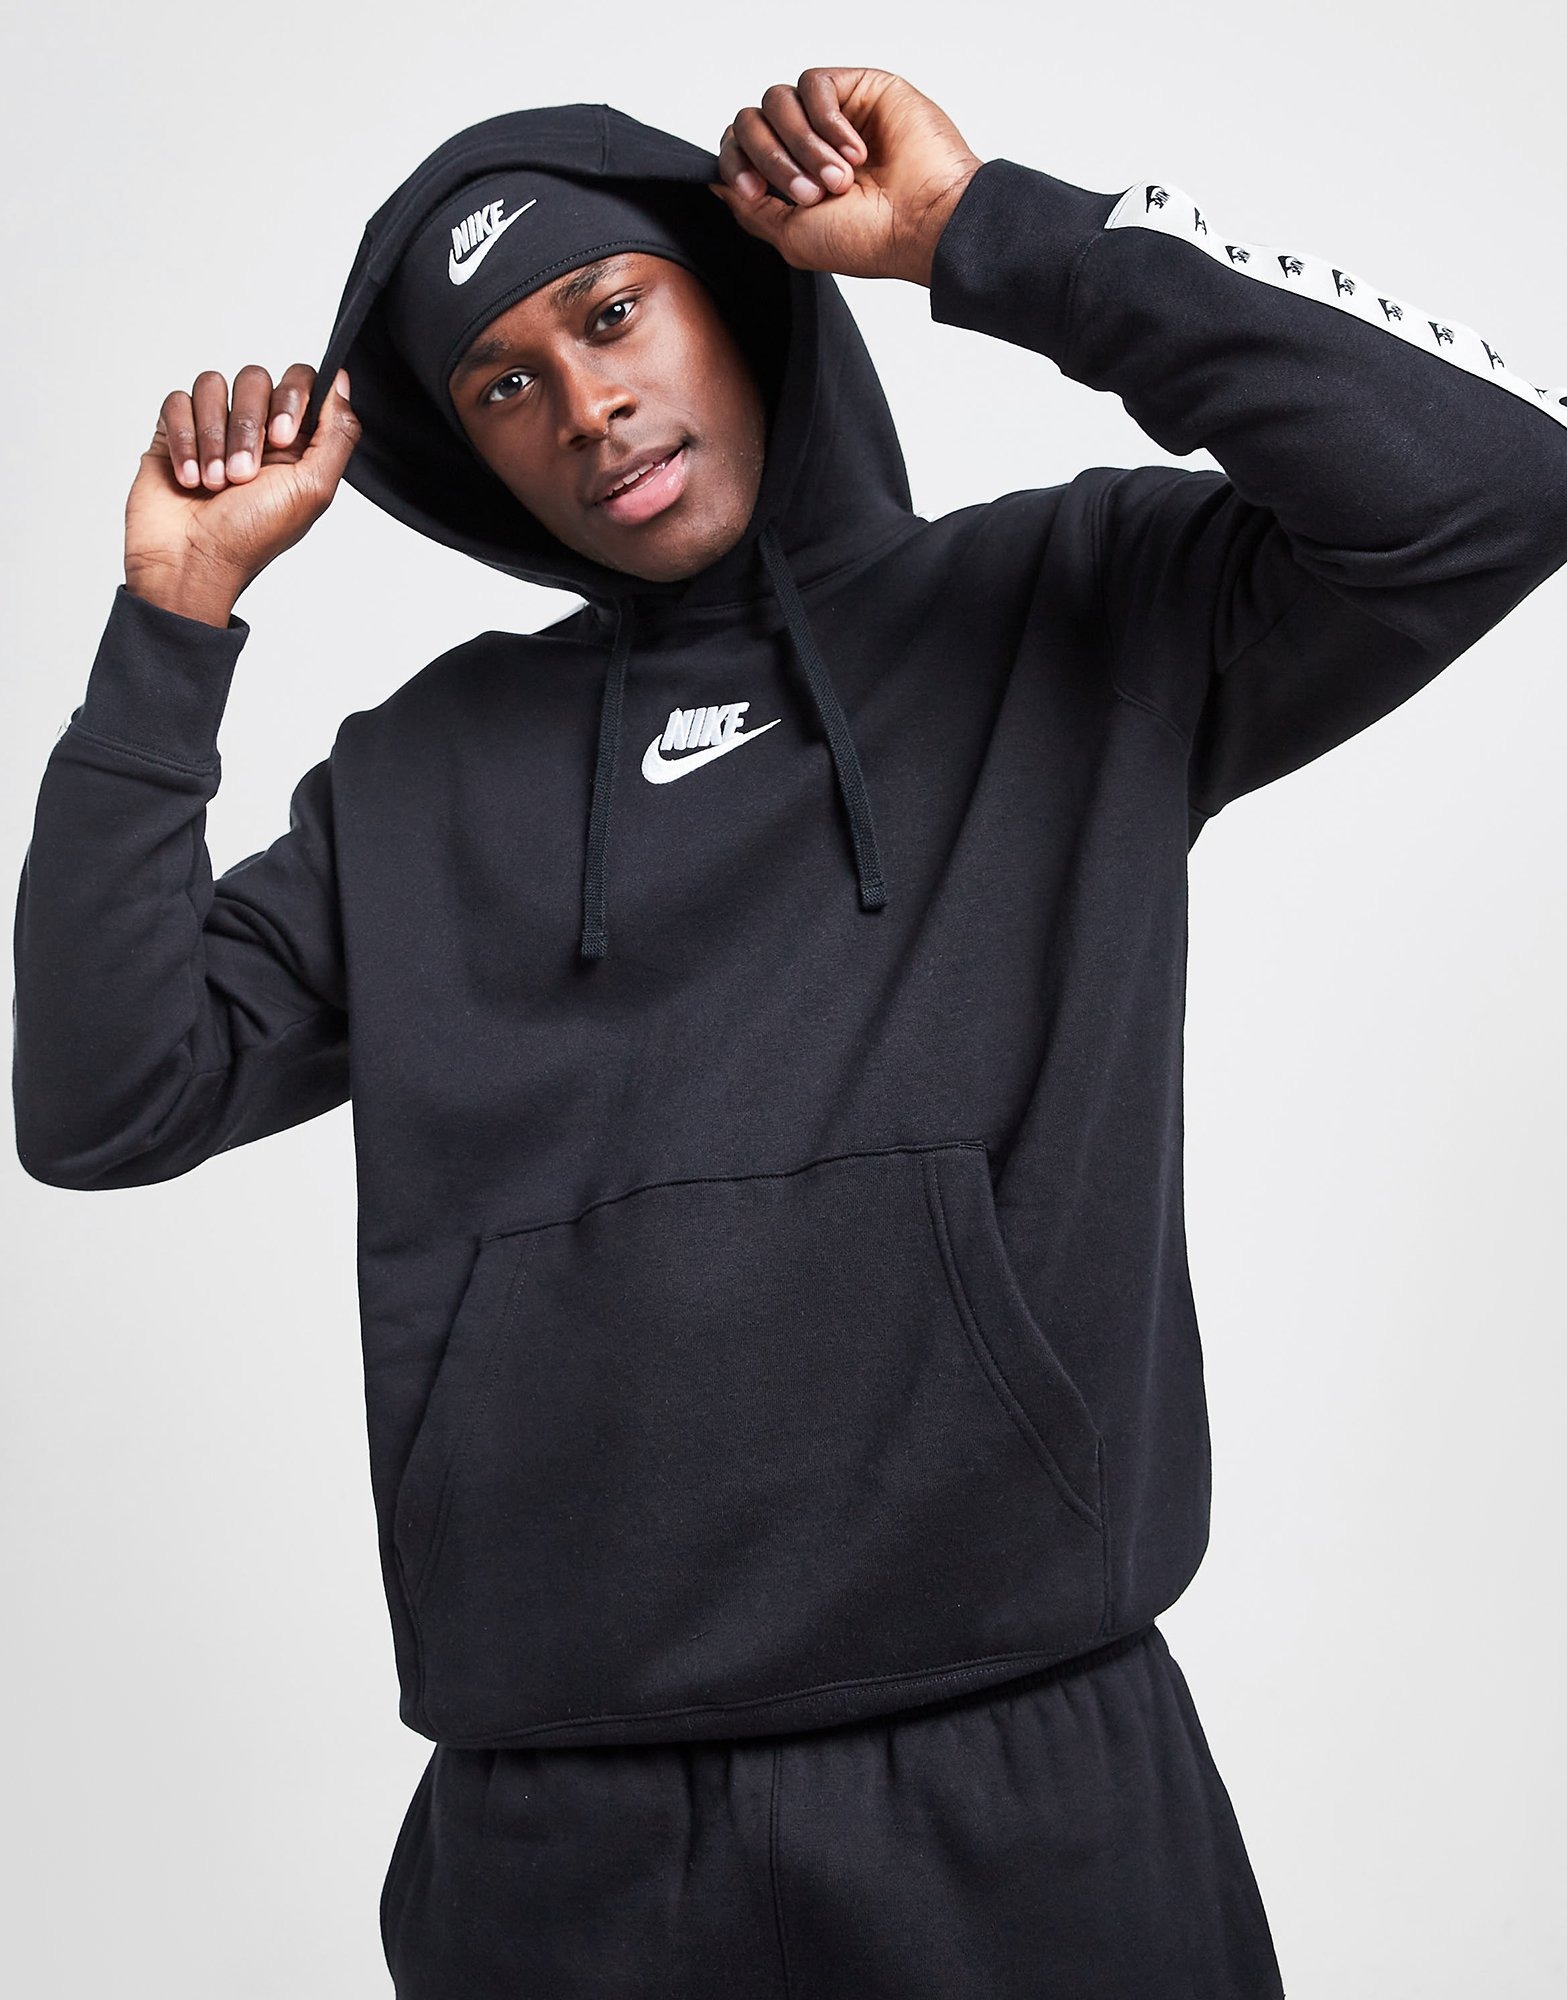 Sudadera con capucha Nike Tape negra hombre - JD Sports España